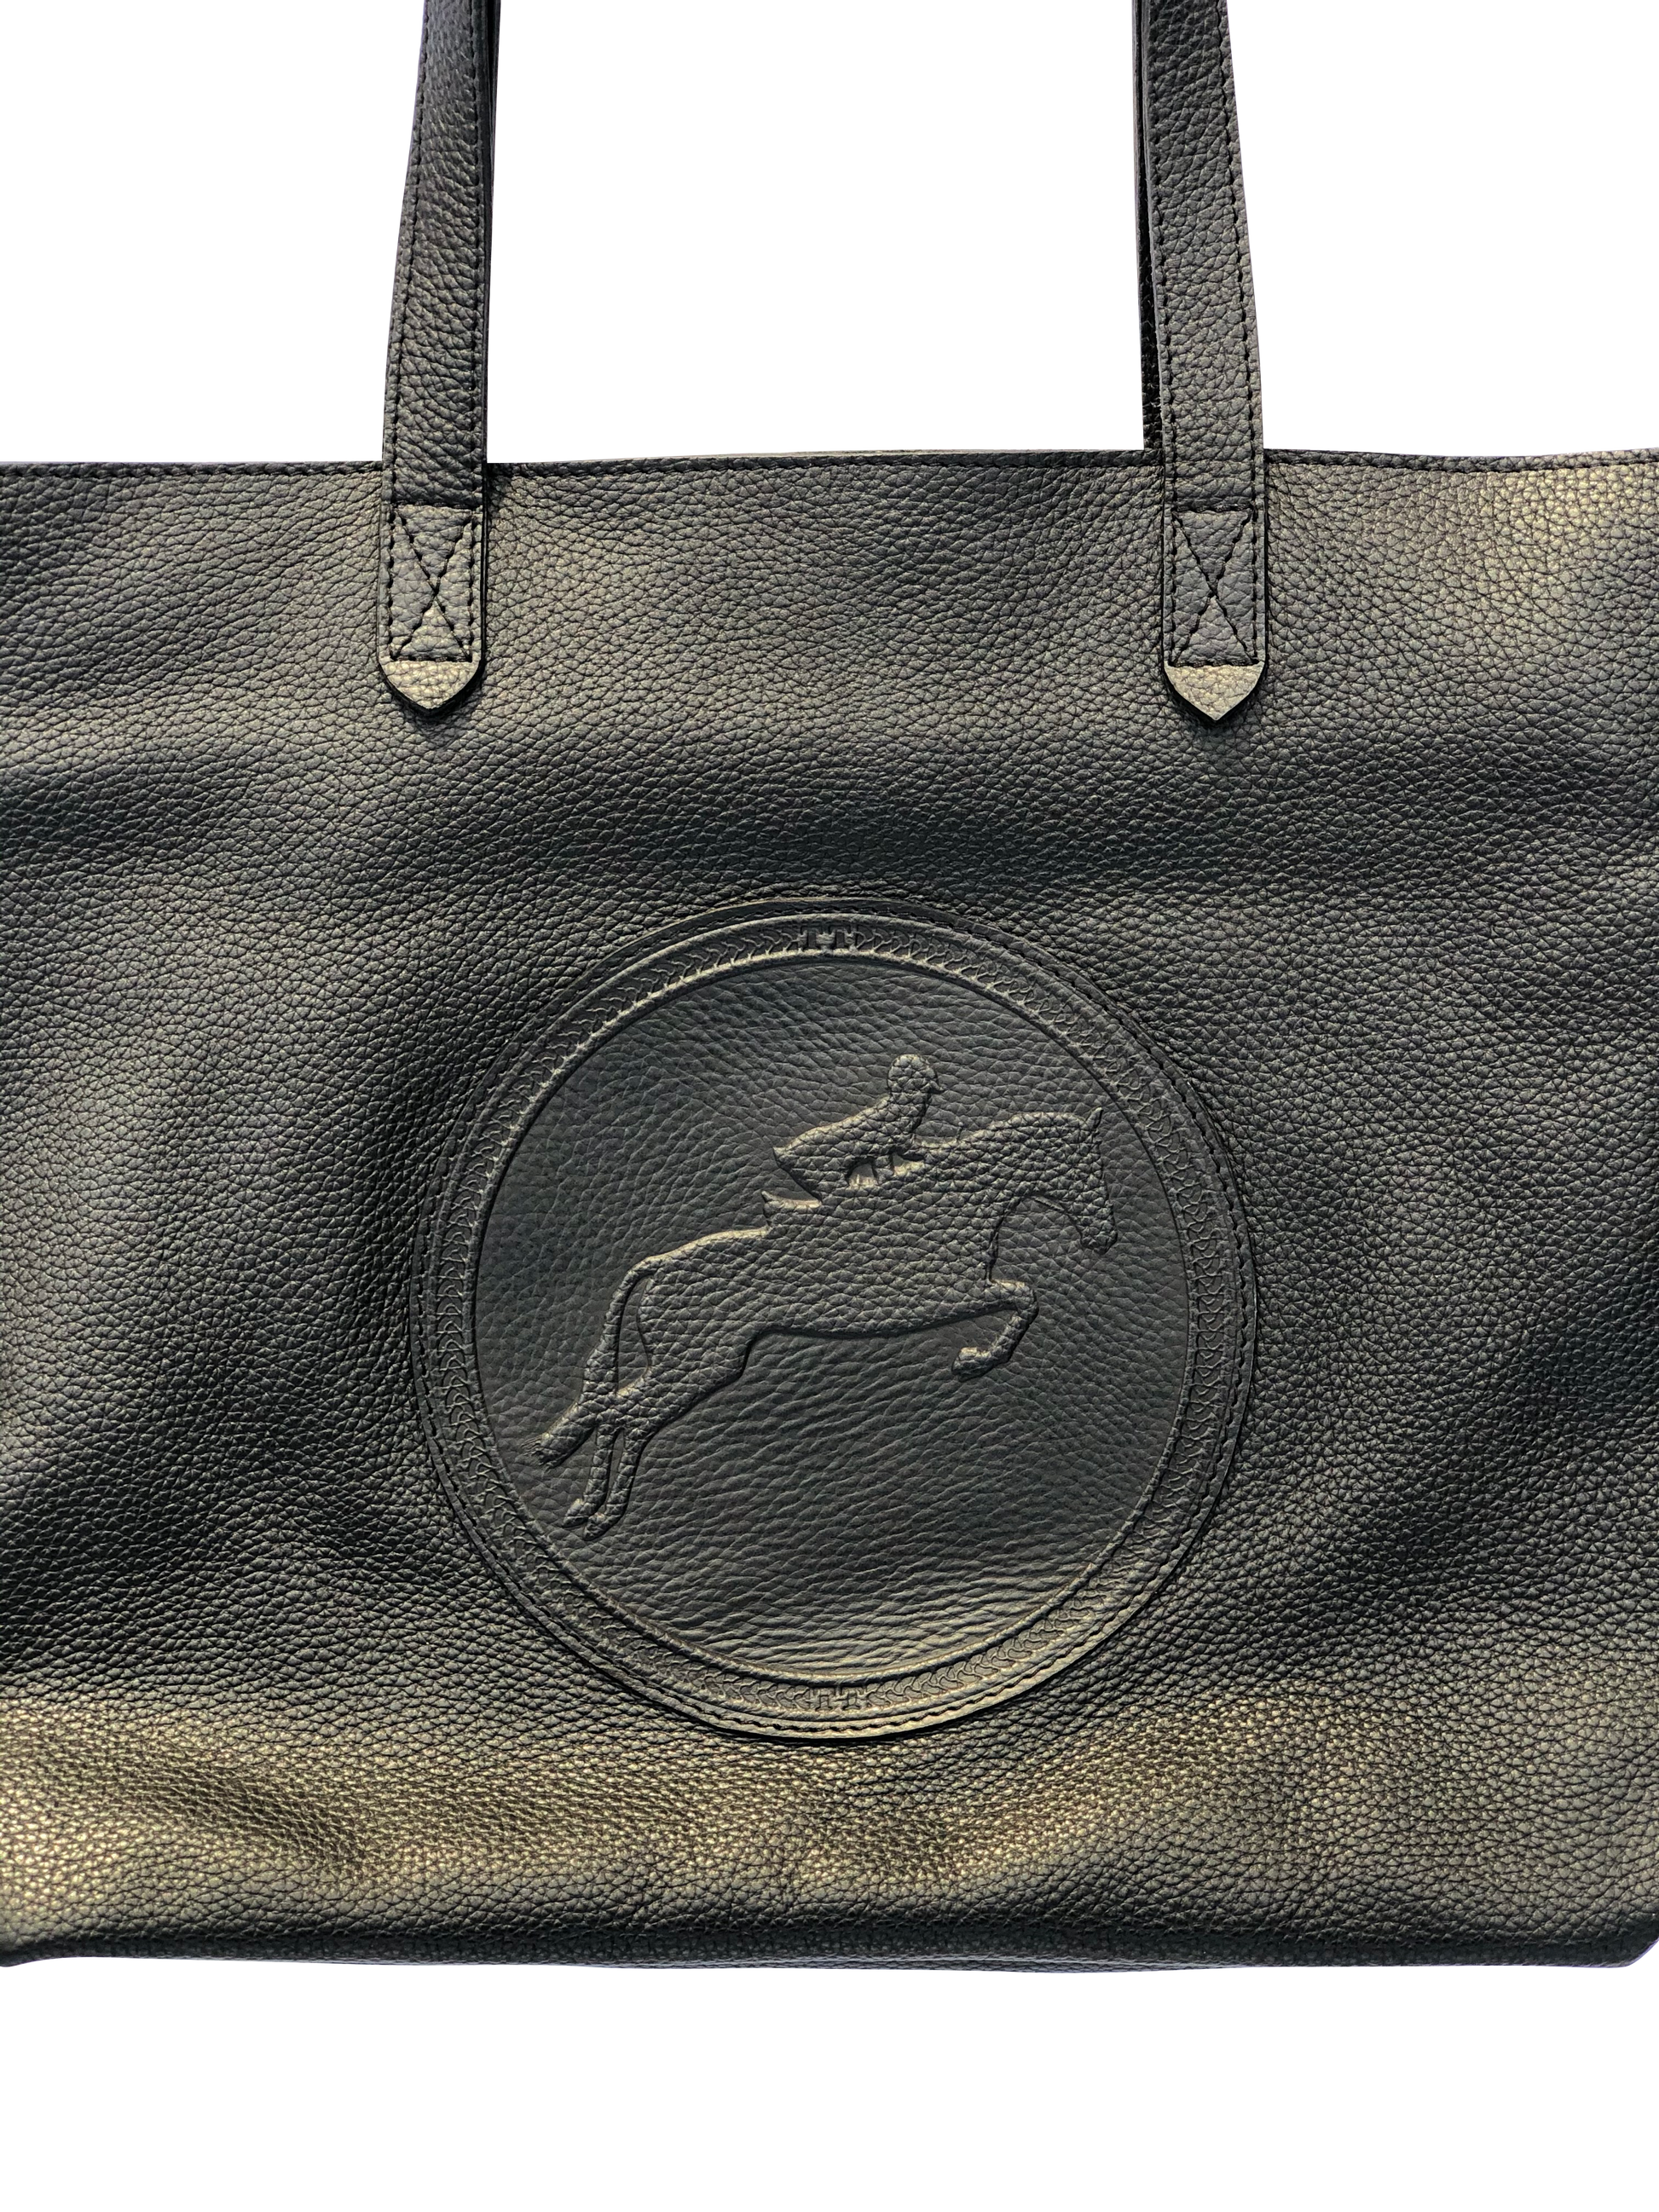 Tucker Tweed Equestrian Leather Handbags Sonoma Shoulder Bag: Hunter/Jumper